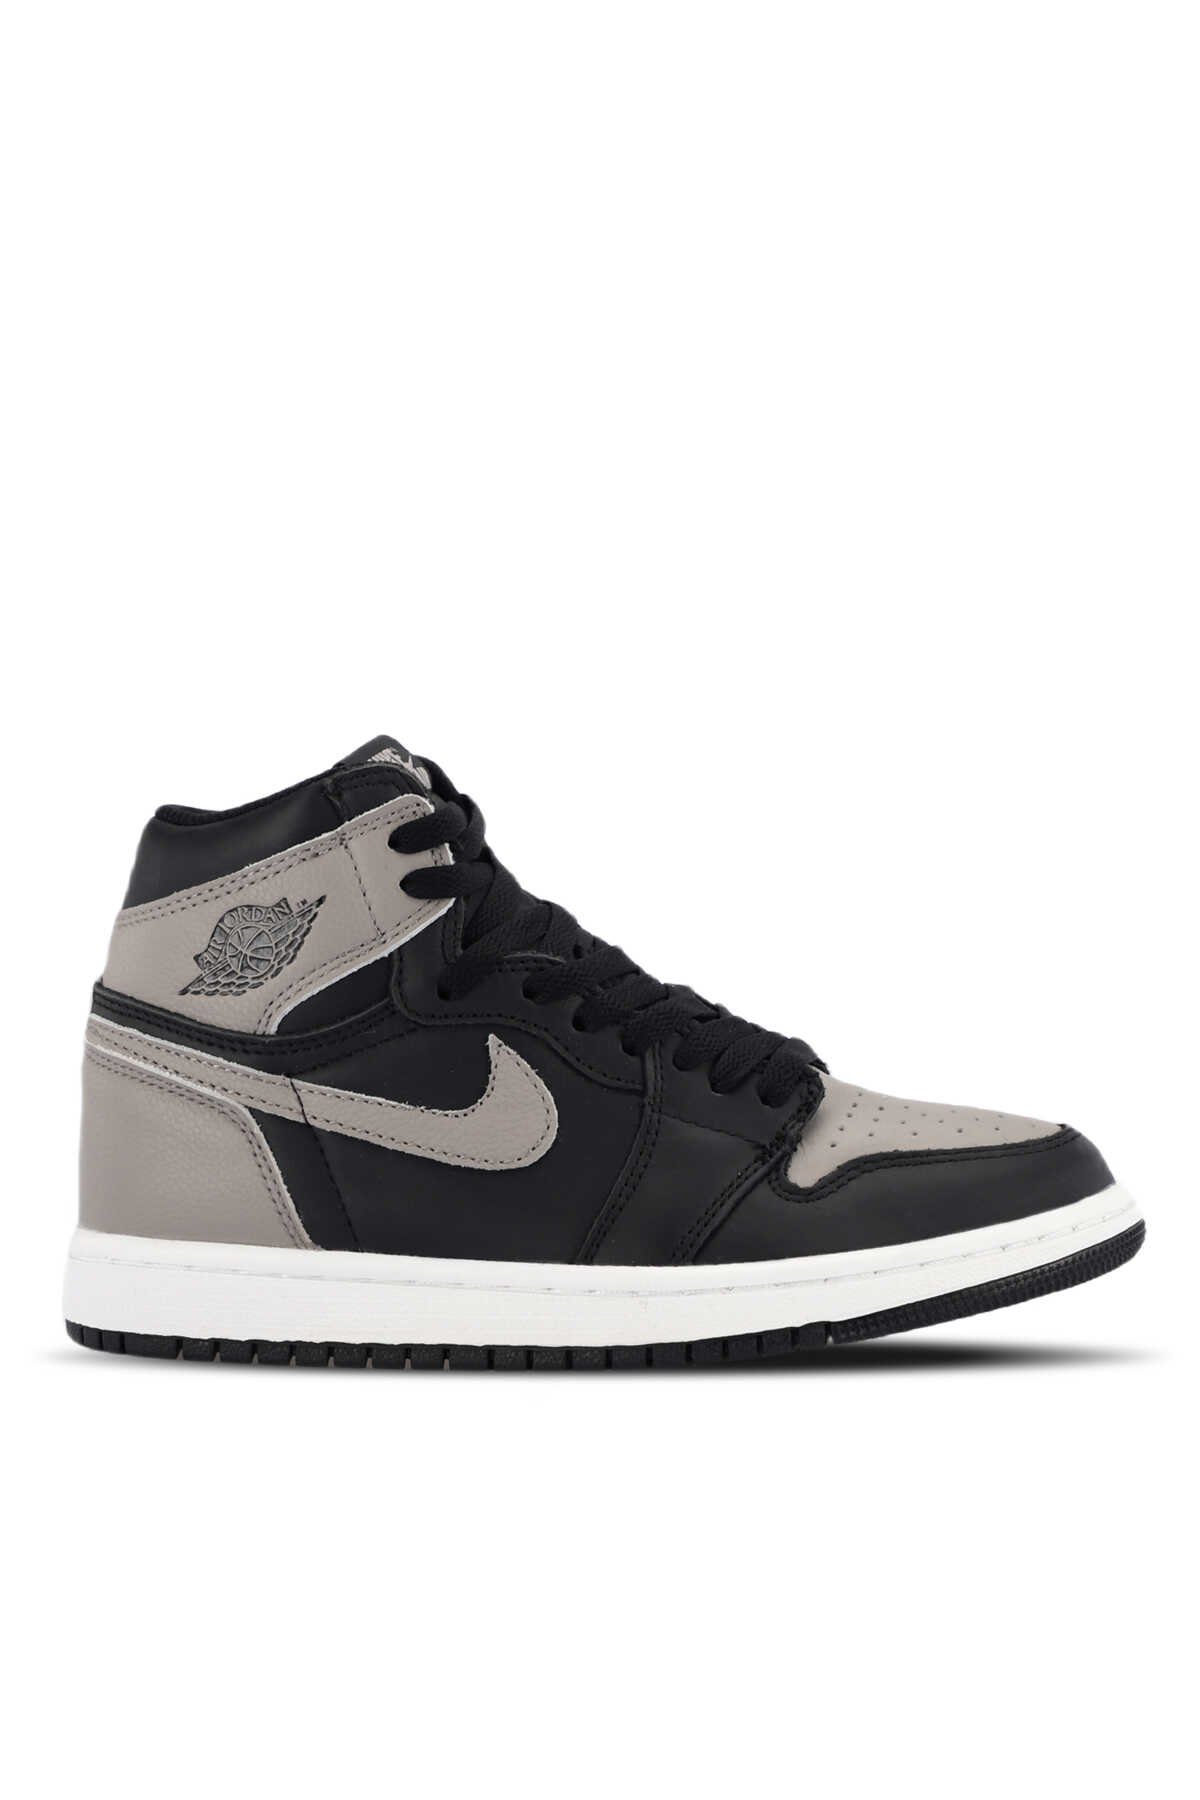 Nike - Nike AIR JORDON 1 RETRO HIGH OG Sneaker Erkek Ayakkabı Gri / Siyah